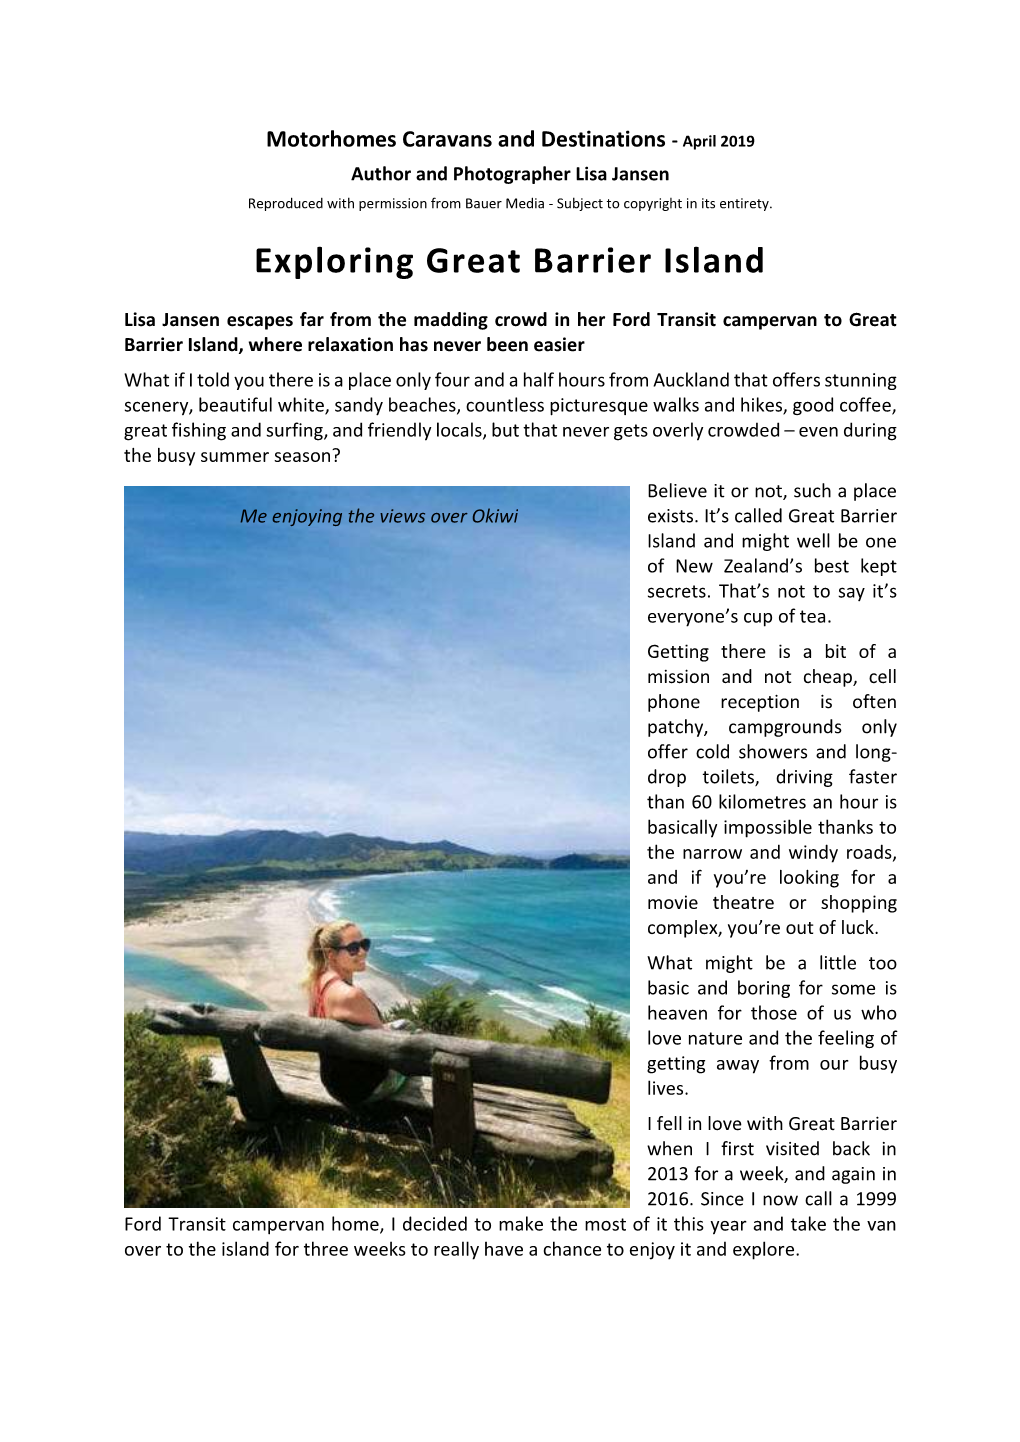 Exploring Great Barrier Island